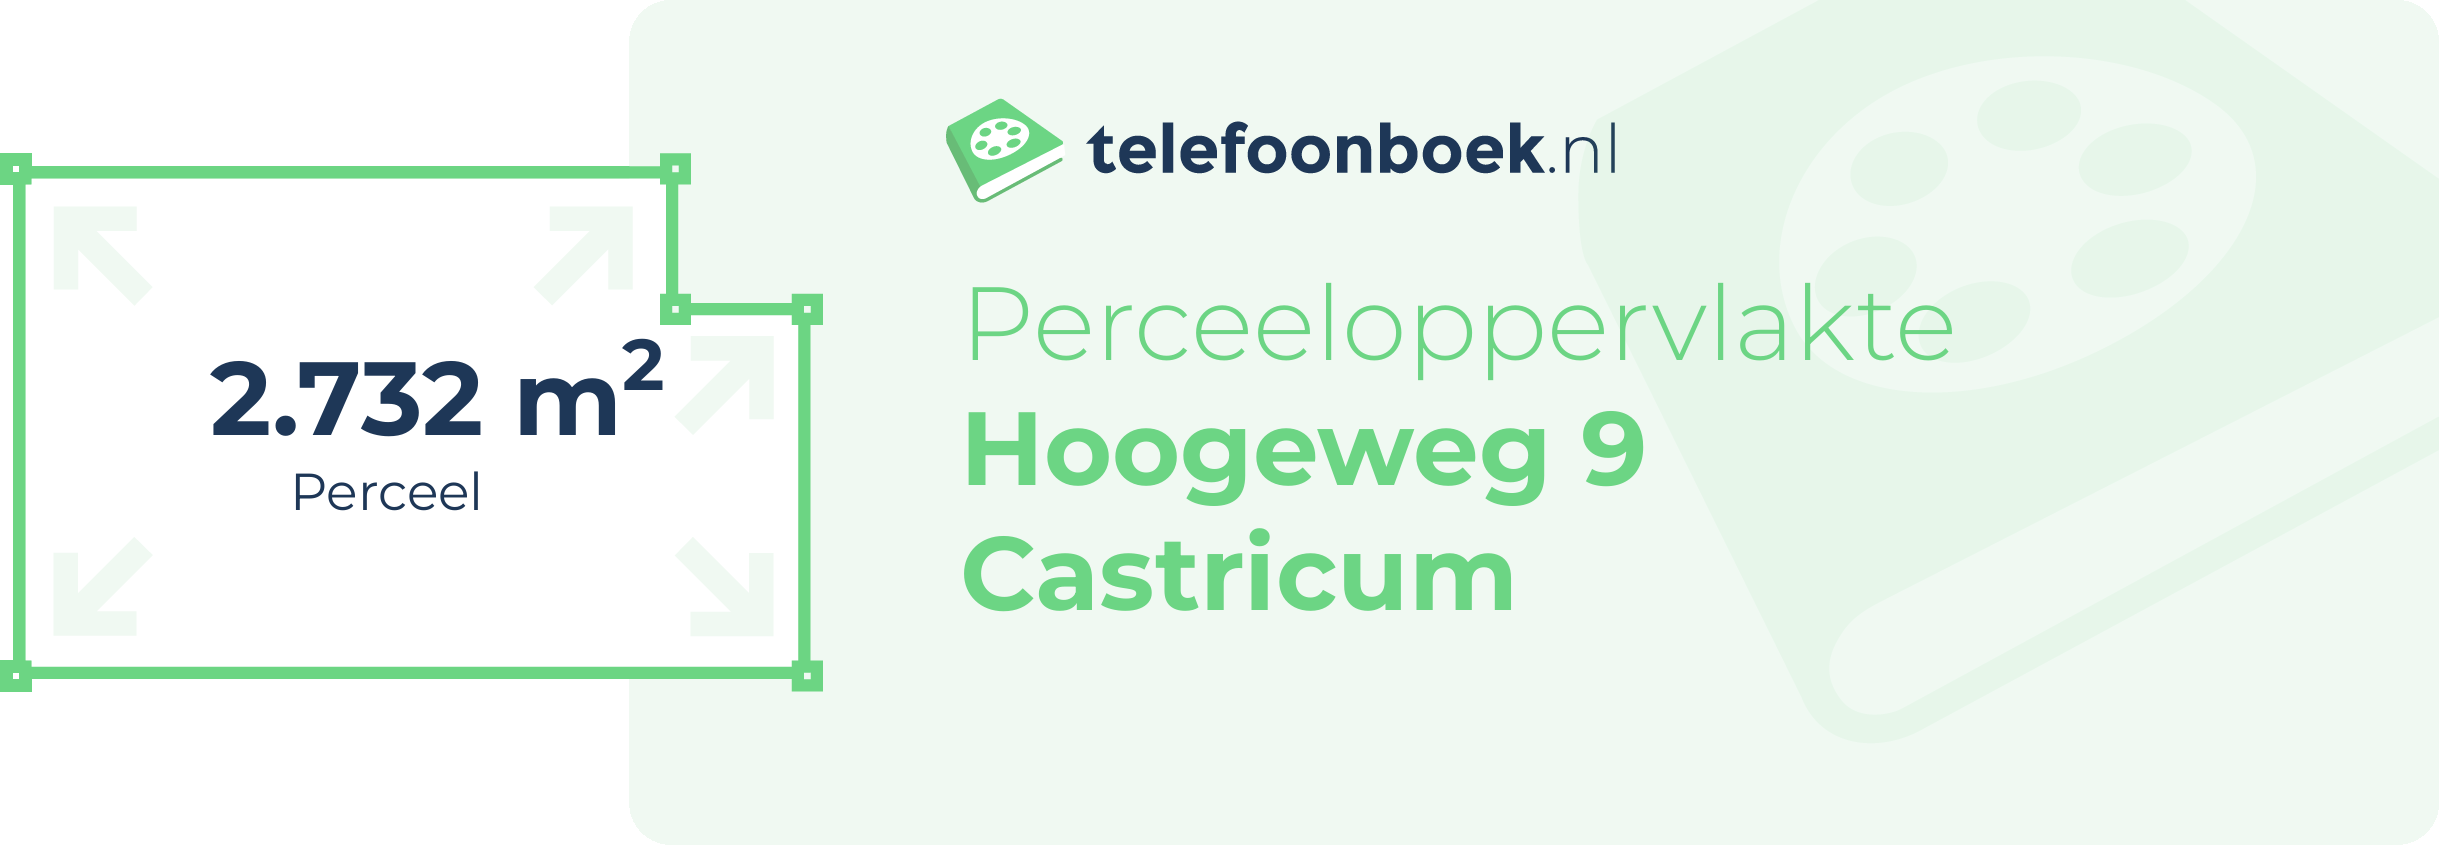 Perceeloppervlakte Hoogeweg 9 Castricum